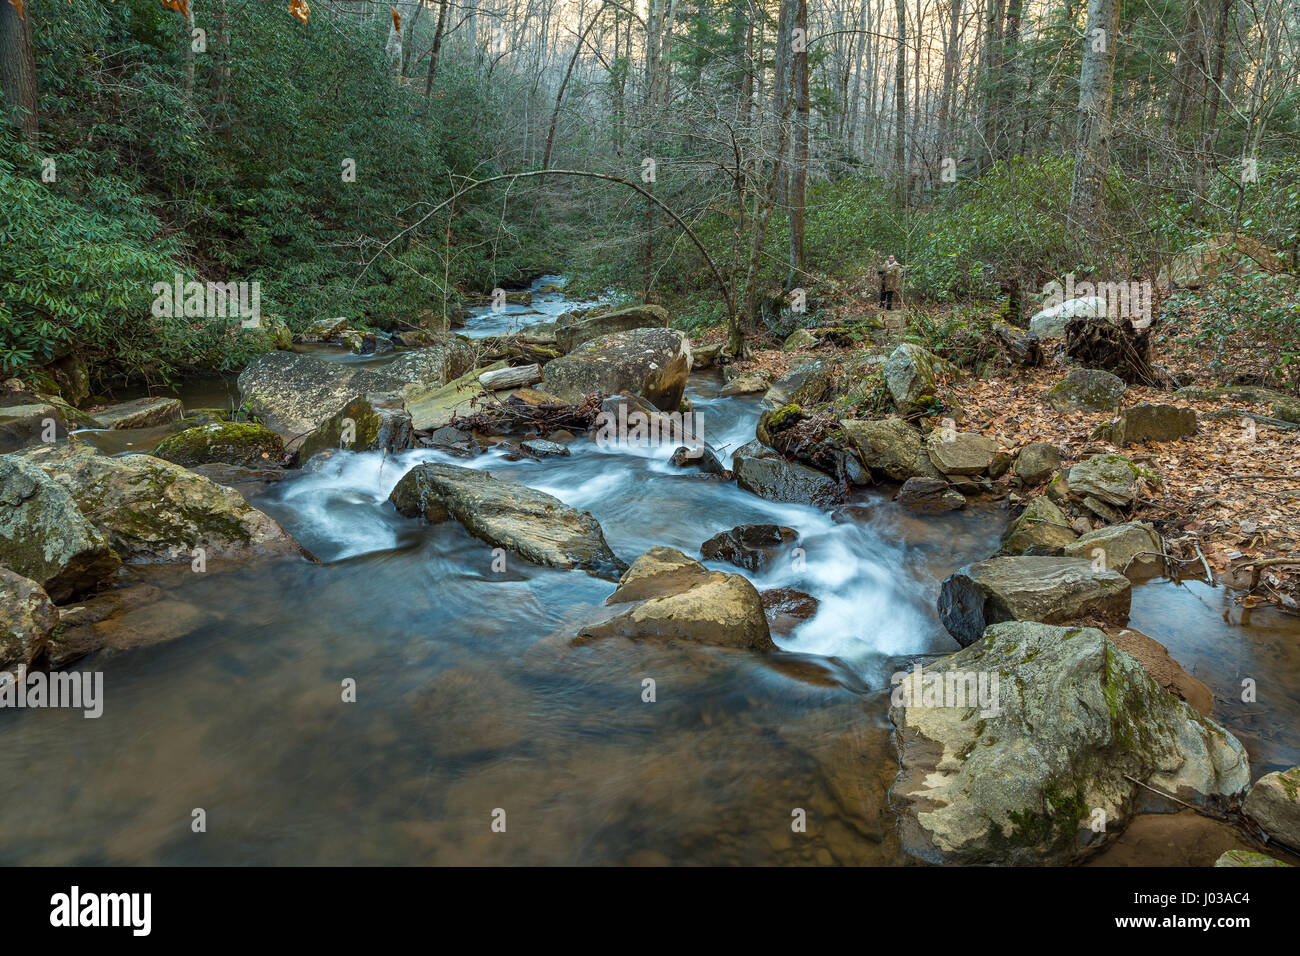 BEAUTIFUL Creek View  8x10 Color Photo  North Carolina Nature Wildlife 